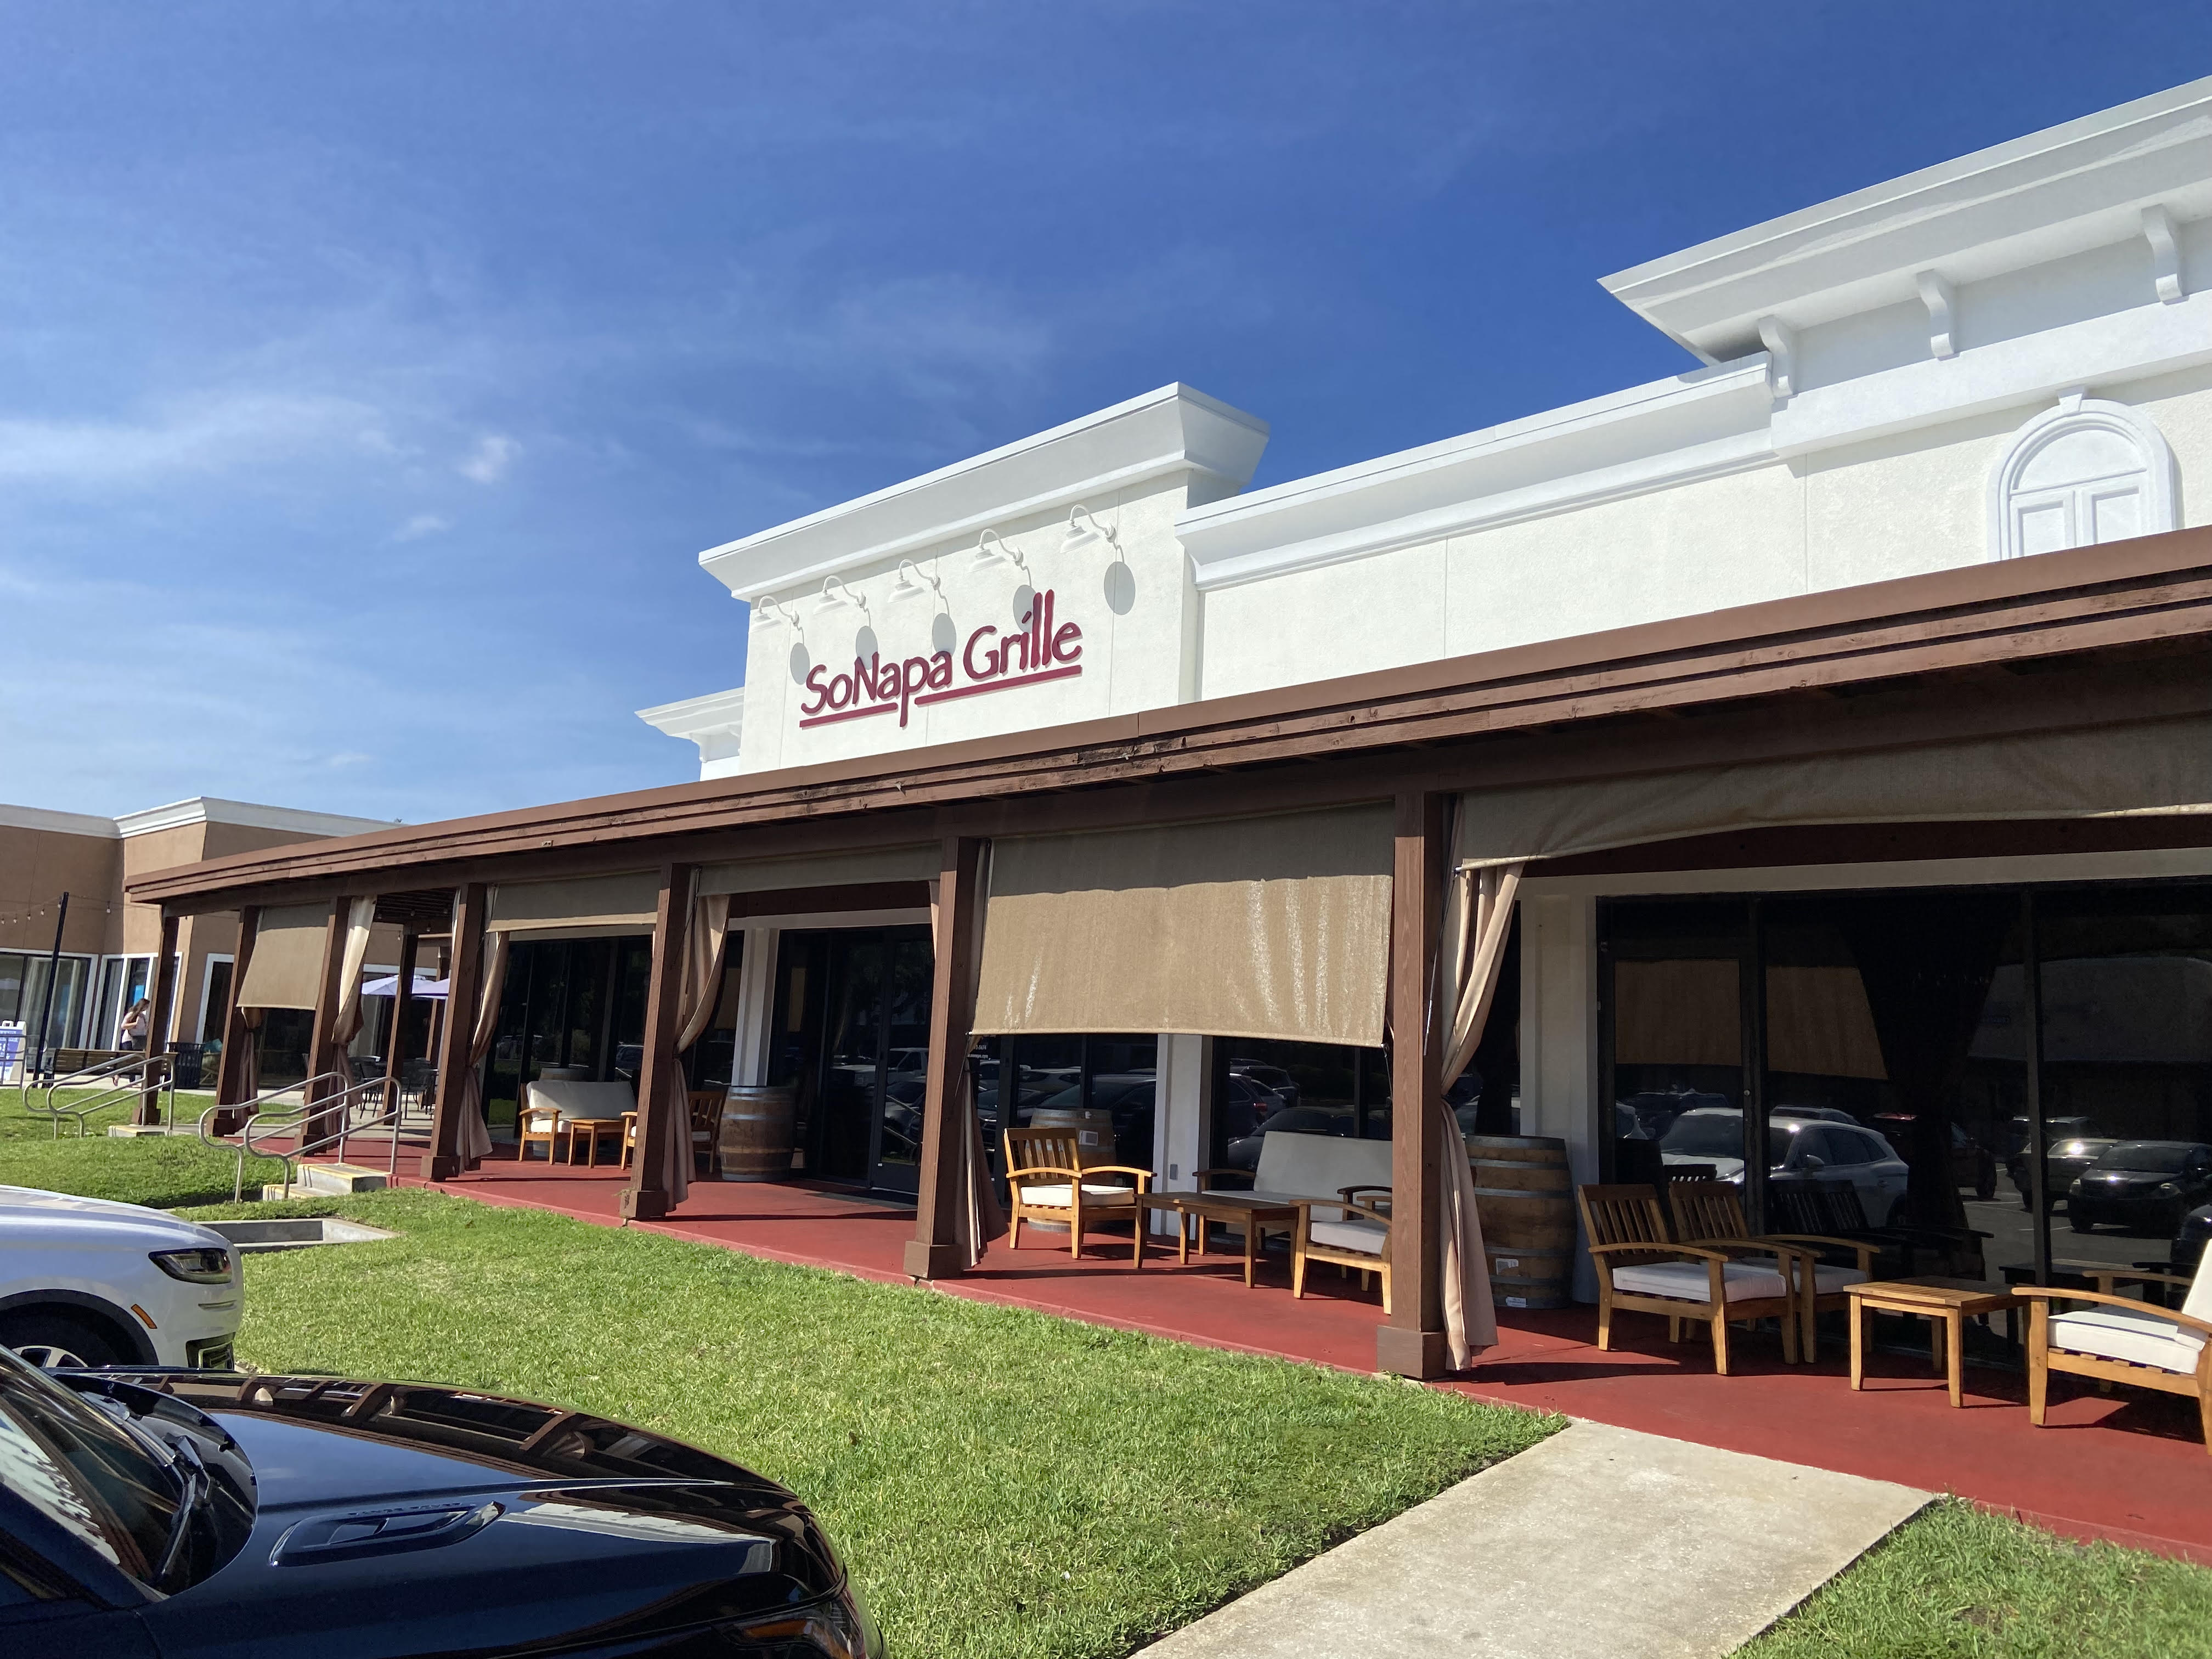 SoNapa Grille - American Restaurant in FL